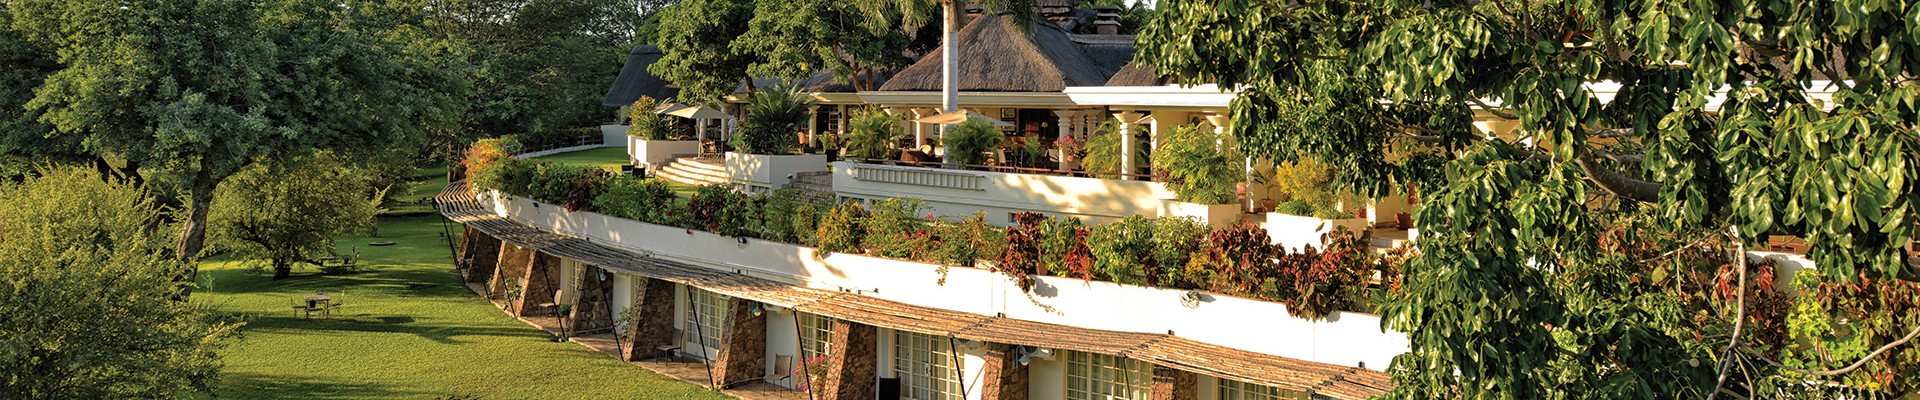 4* Superior Ilala Lodge Hotel - Victoria Falls Package (3 Nights)